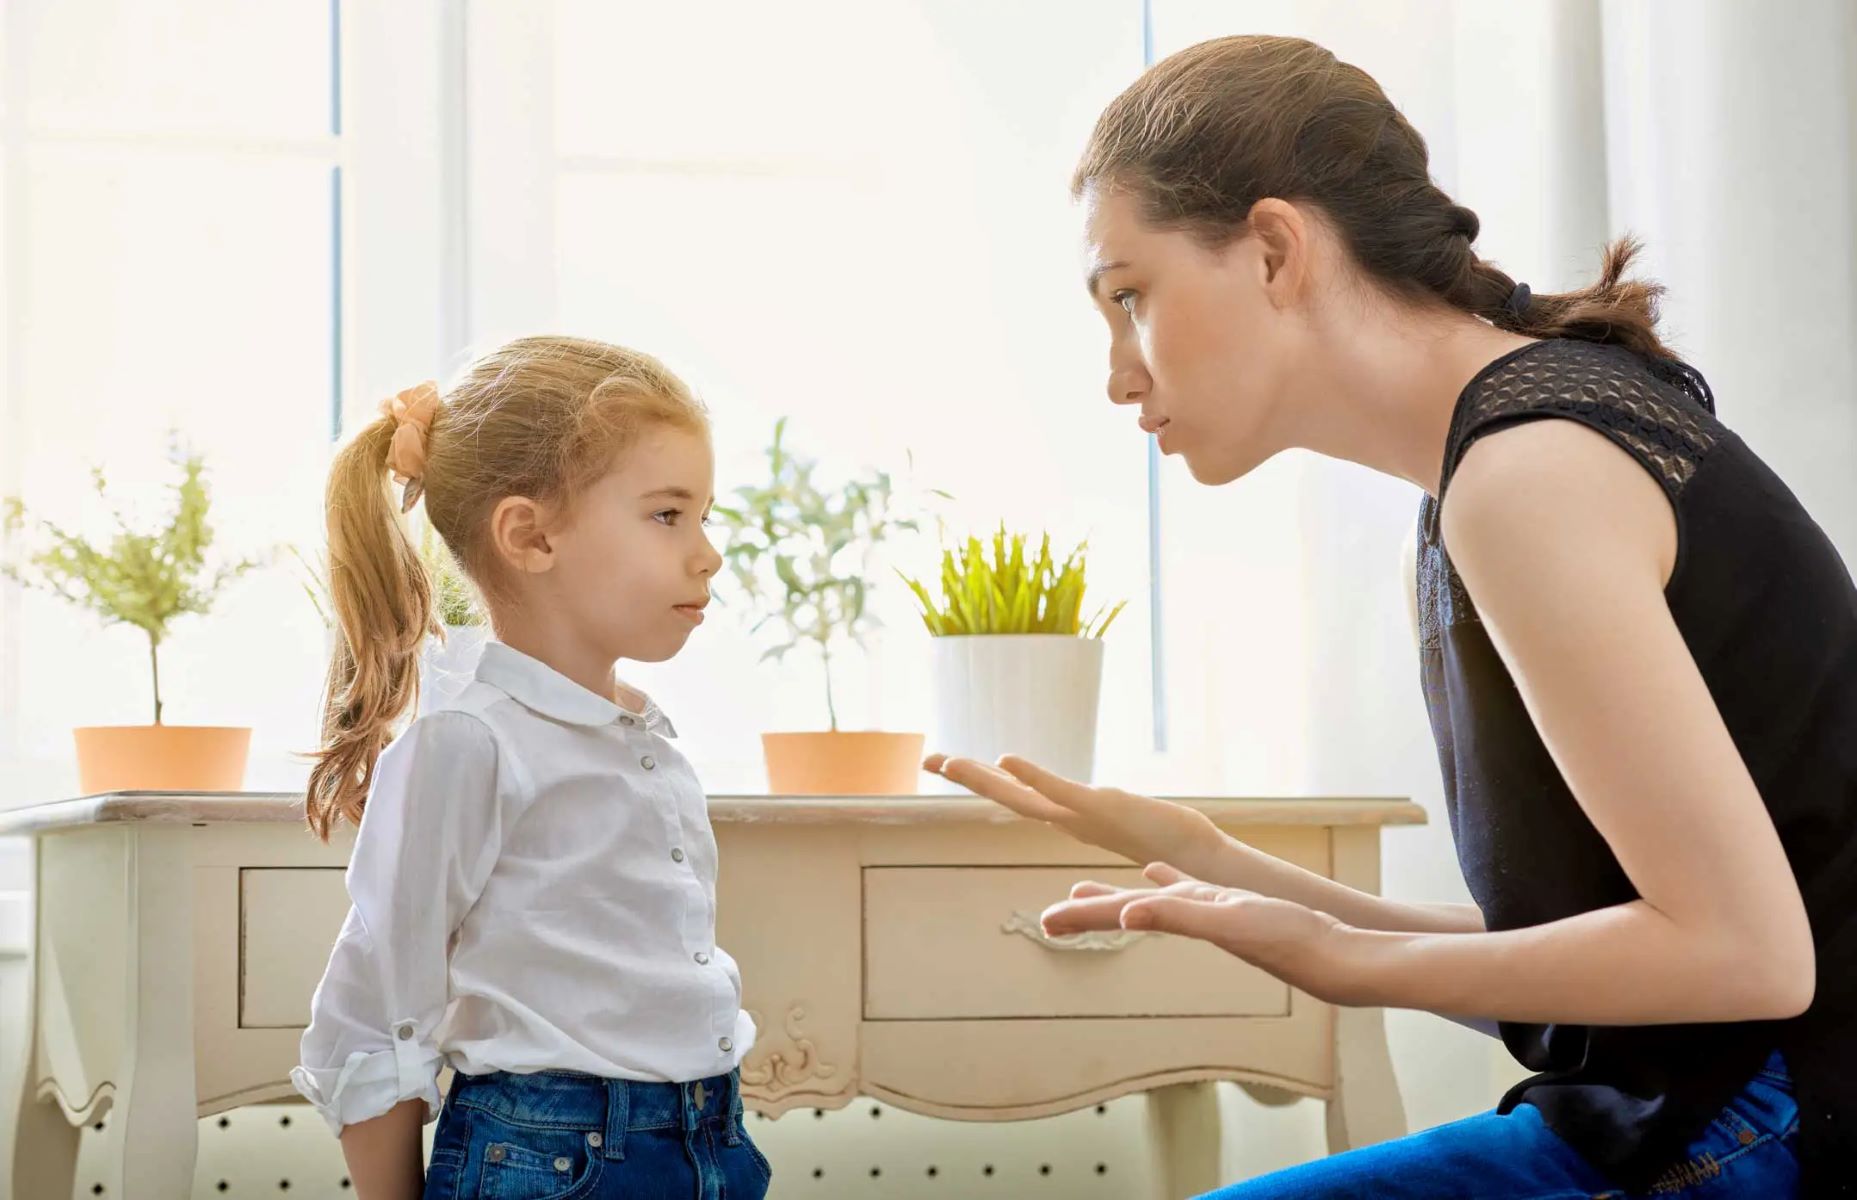 5 Creative Ways To Discipline Your Daughter